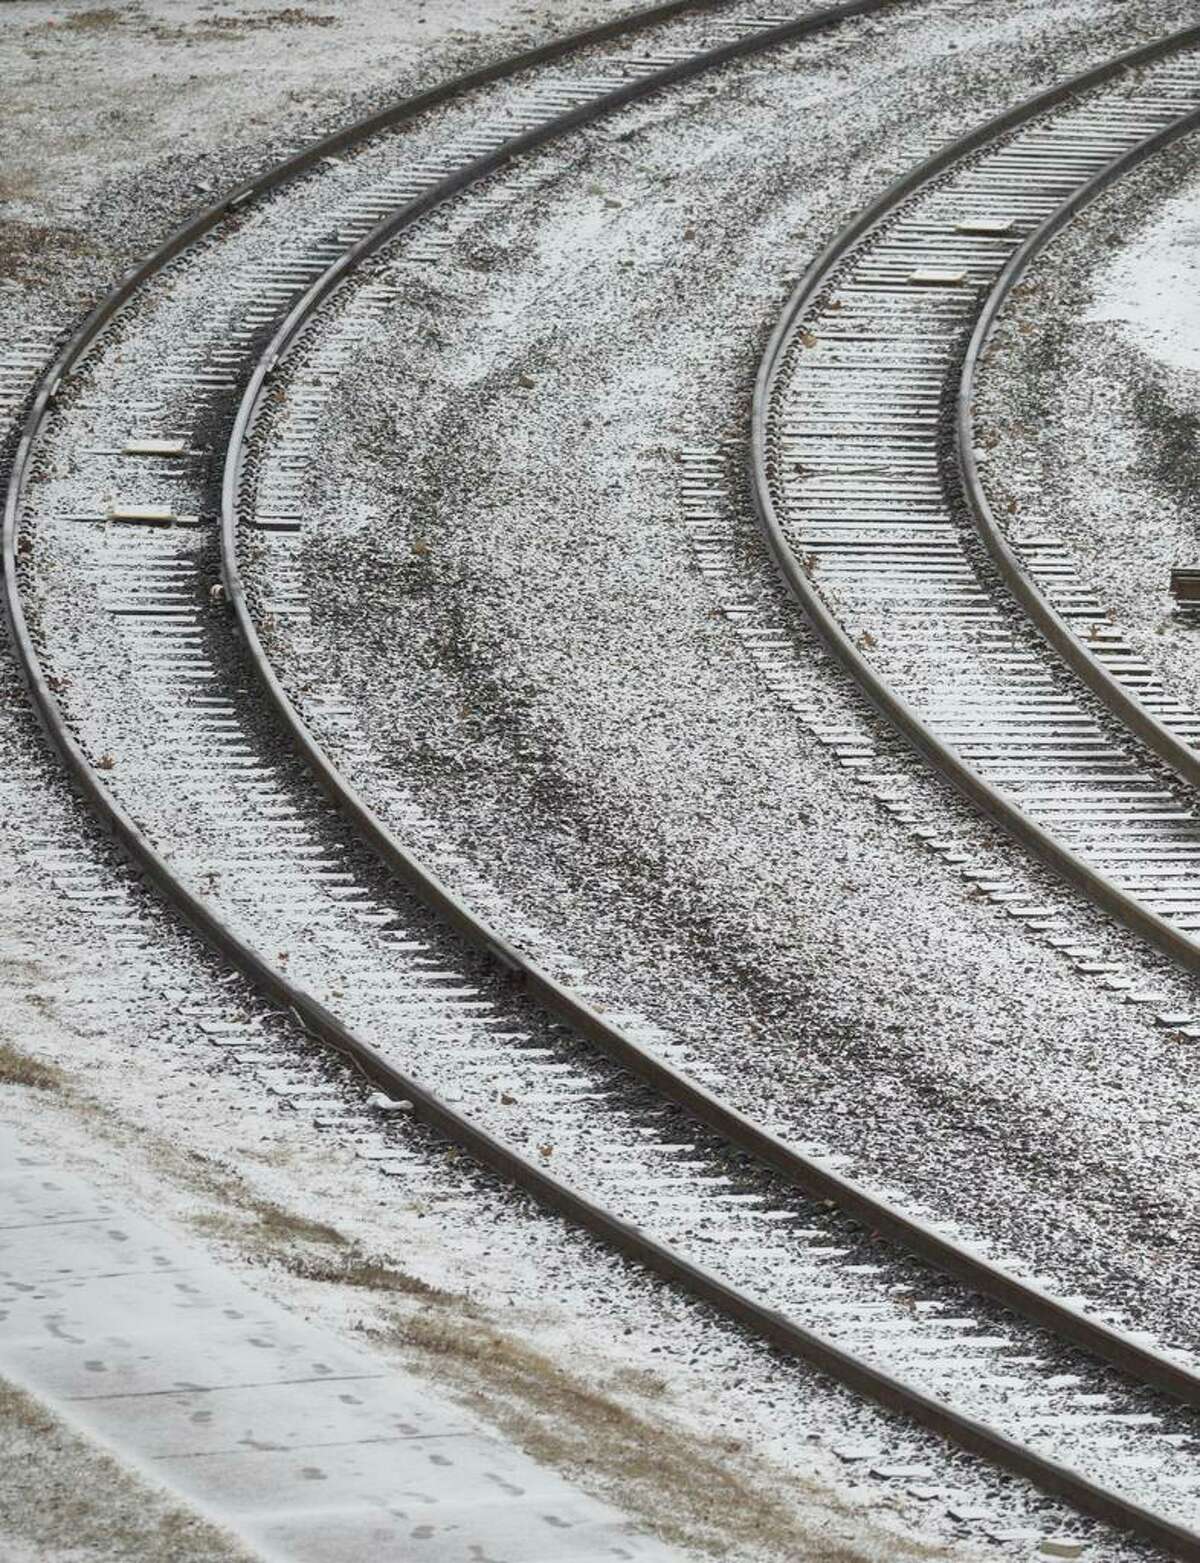 Snow outlines train tracks outside the Danbury Railway Museum.